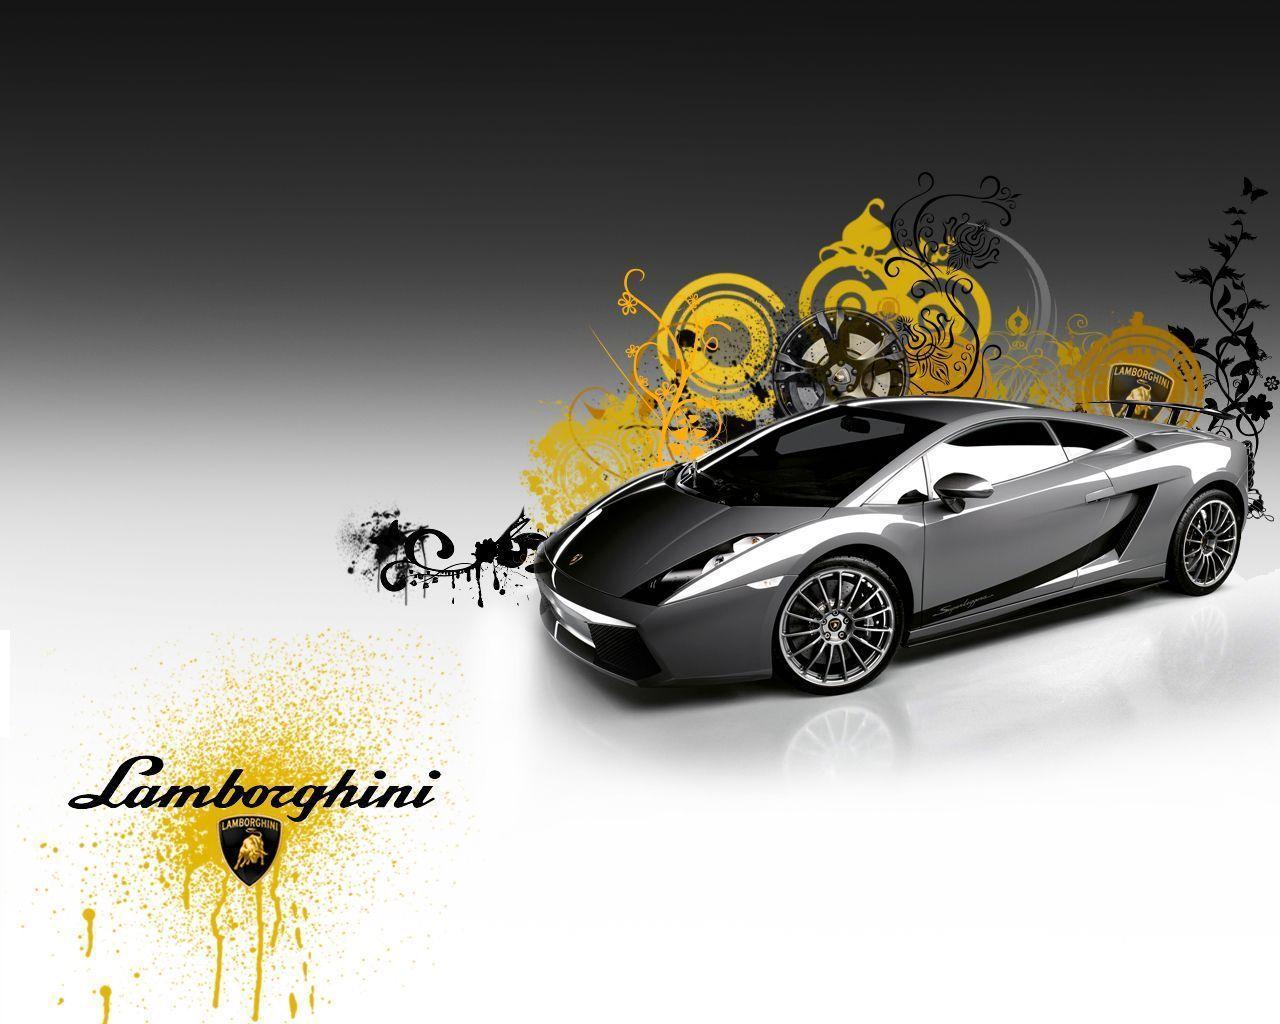 Lamborghini Gallardo Wallpaper Desktop Downloa Wallpaper